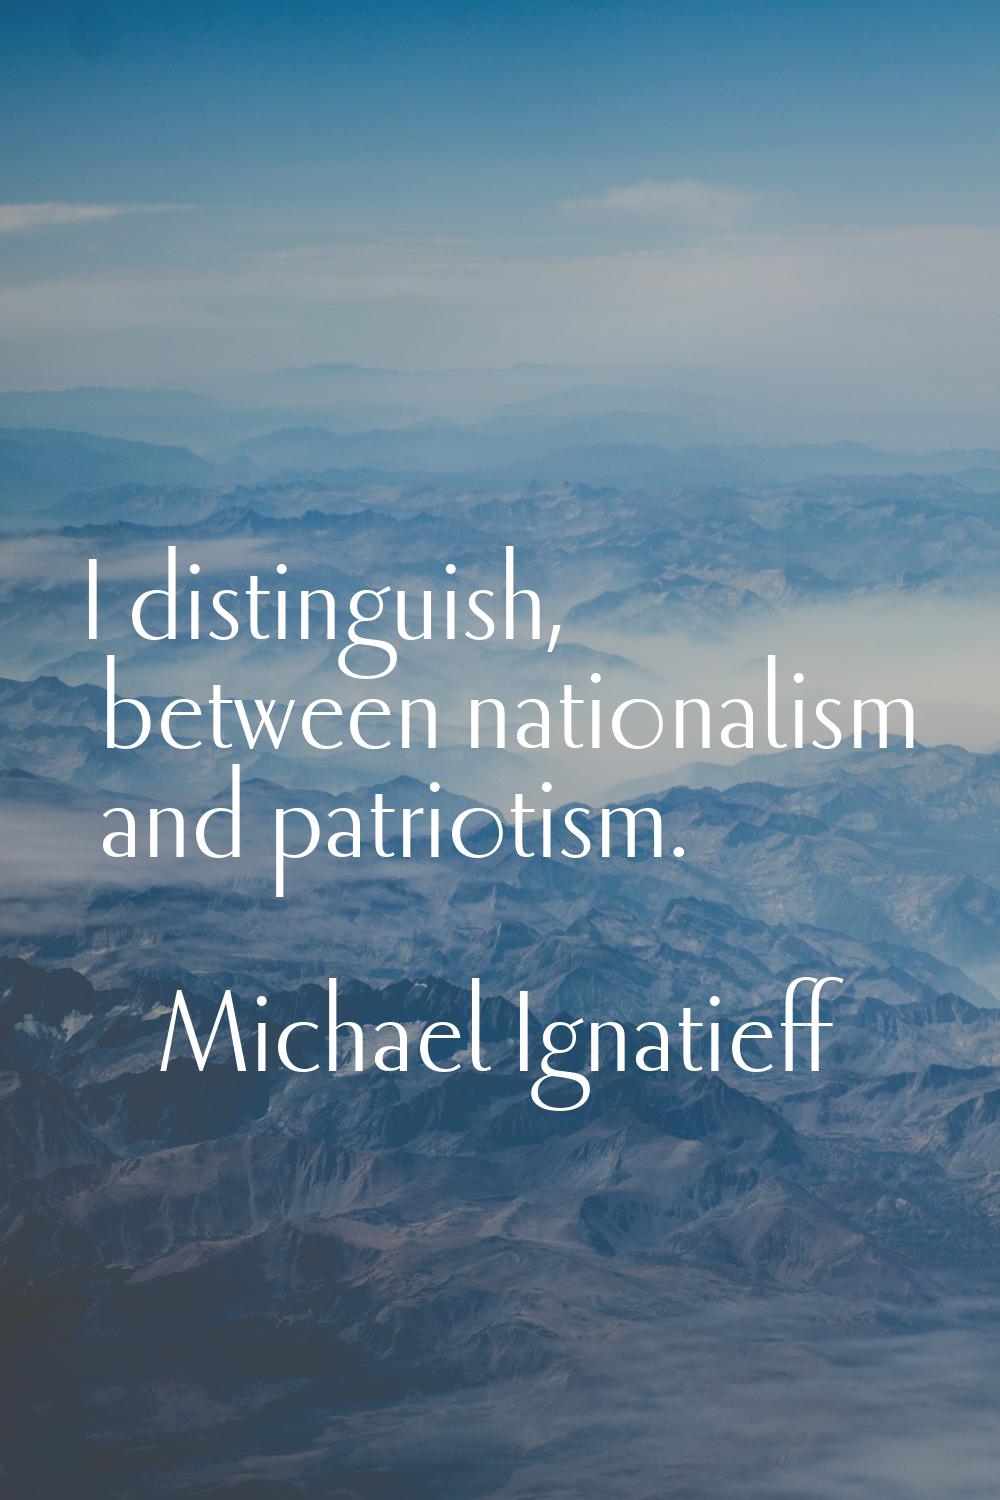 I distinguish, between nationalism and patriotism.